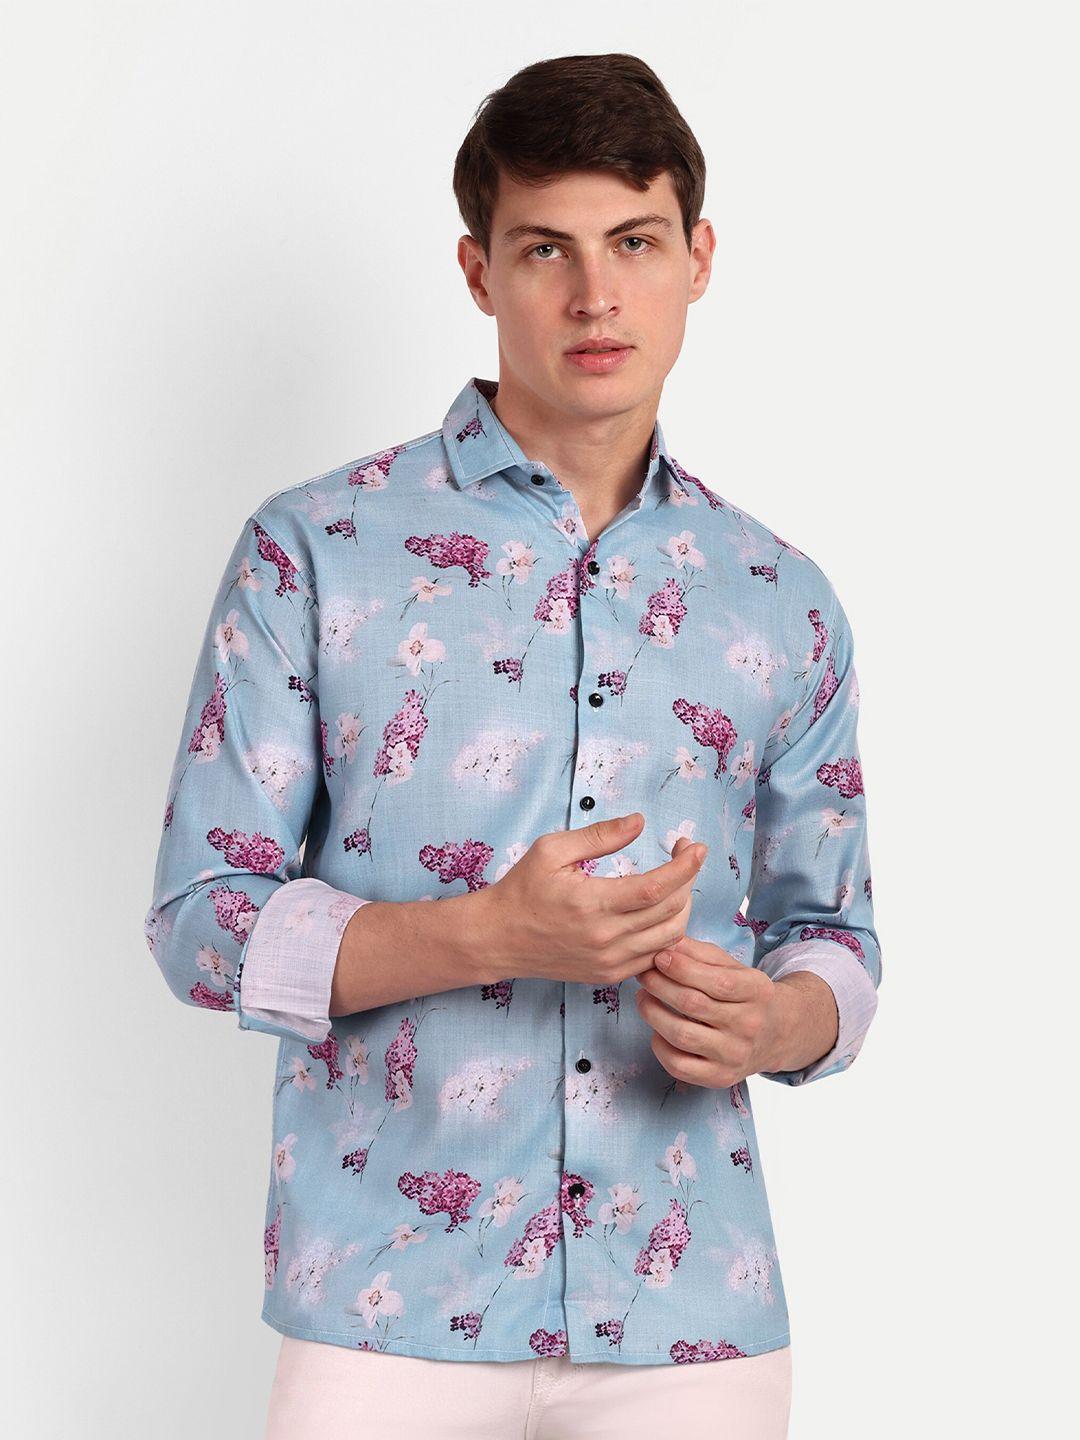 colorwings slim fit floral printed casual shirt